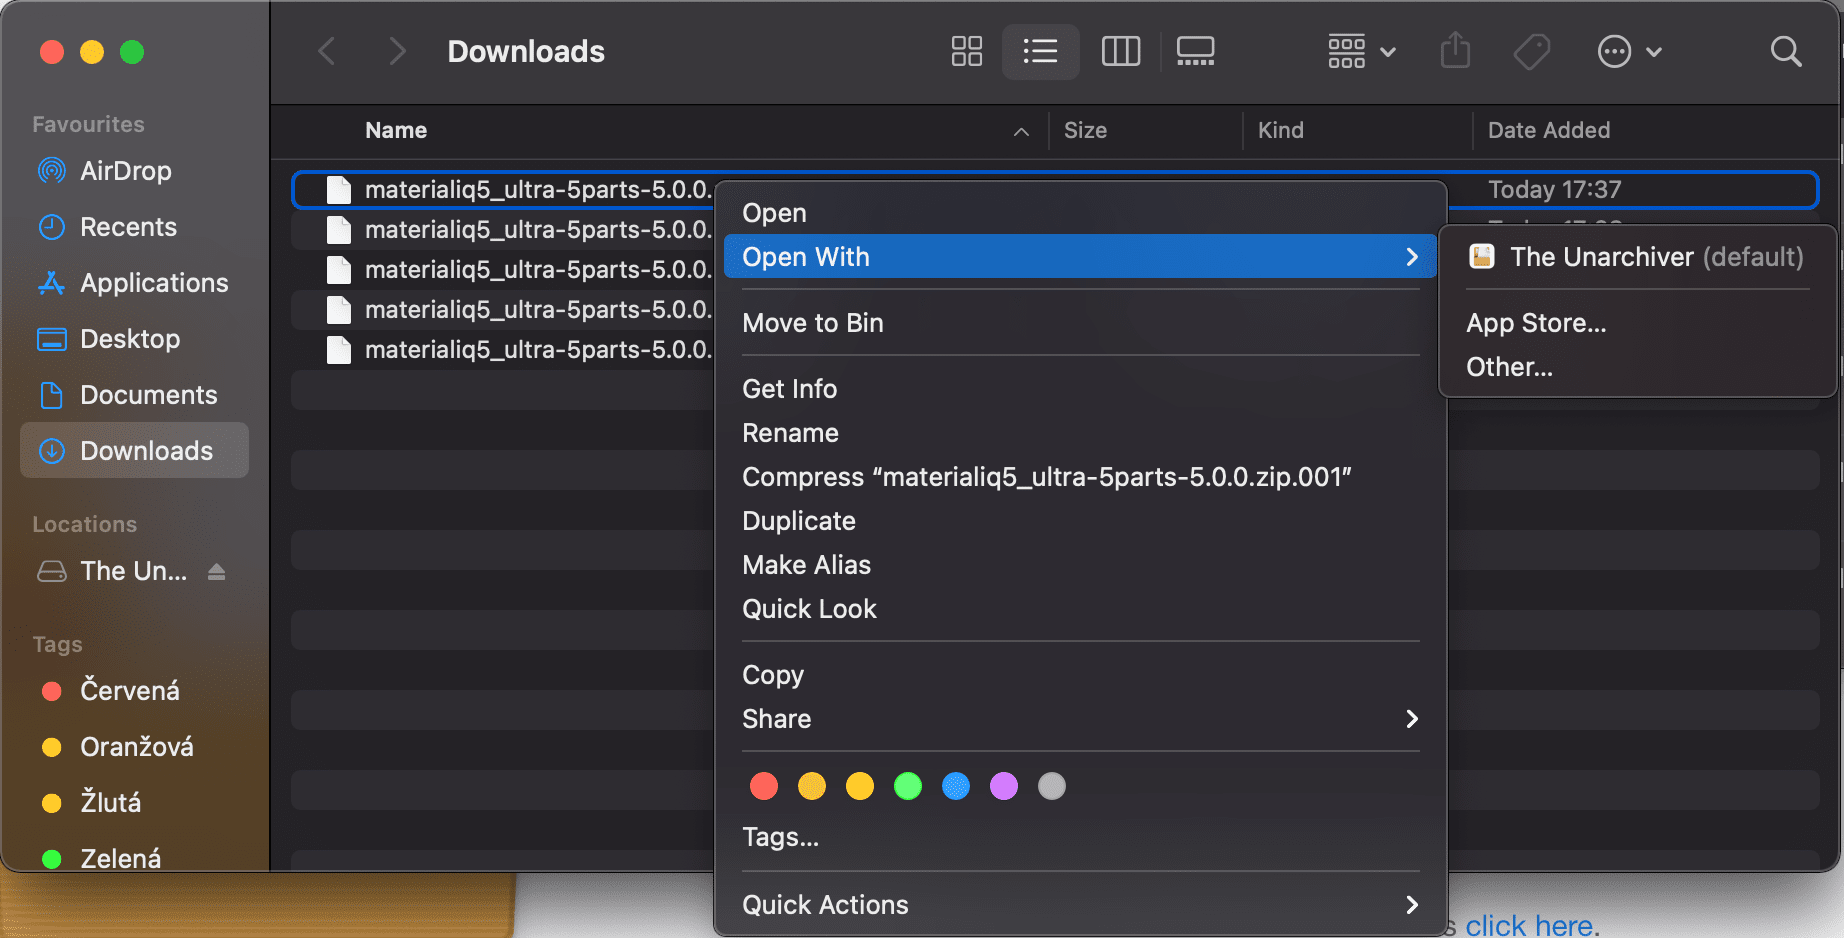 The Unarchiver context menu in macOS 10